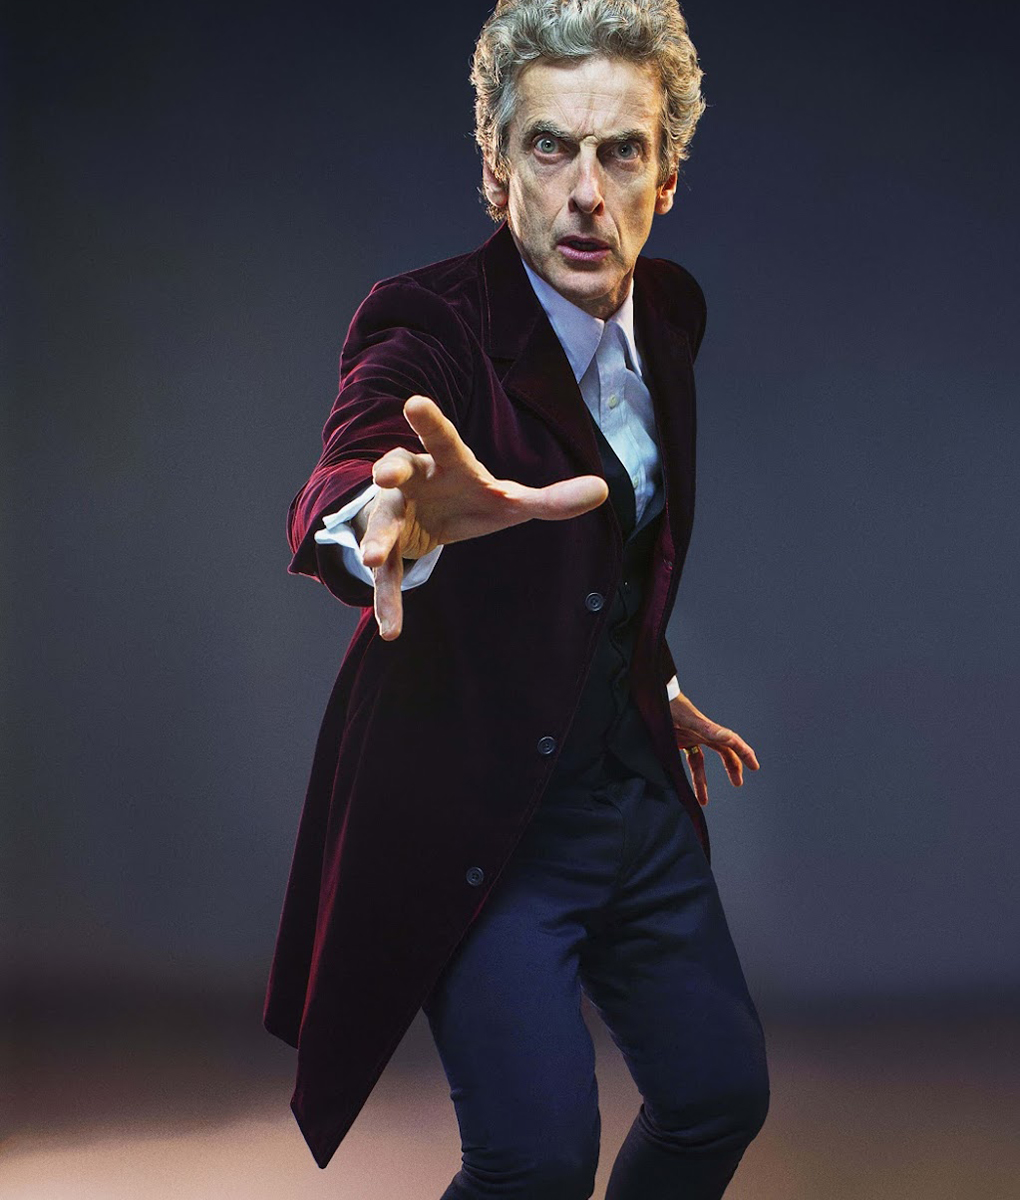 12th Doctor Peter Capaldi Black Coat for Sale